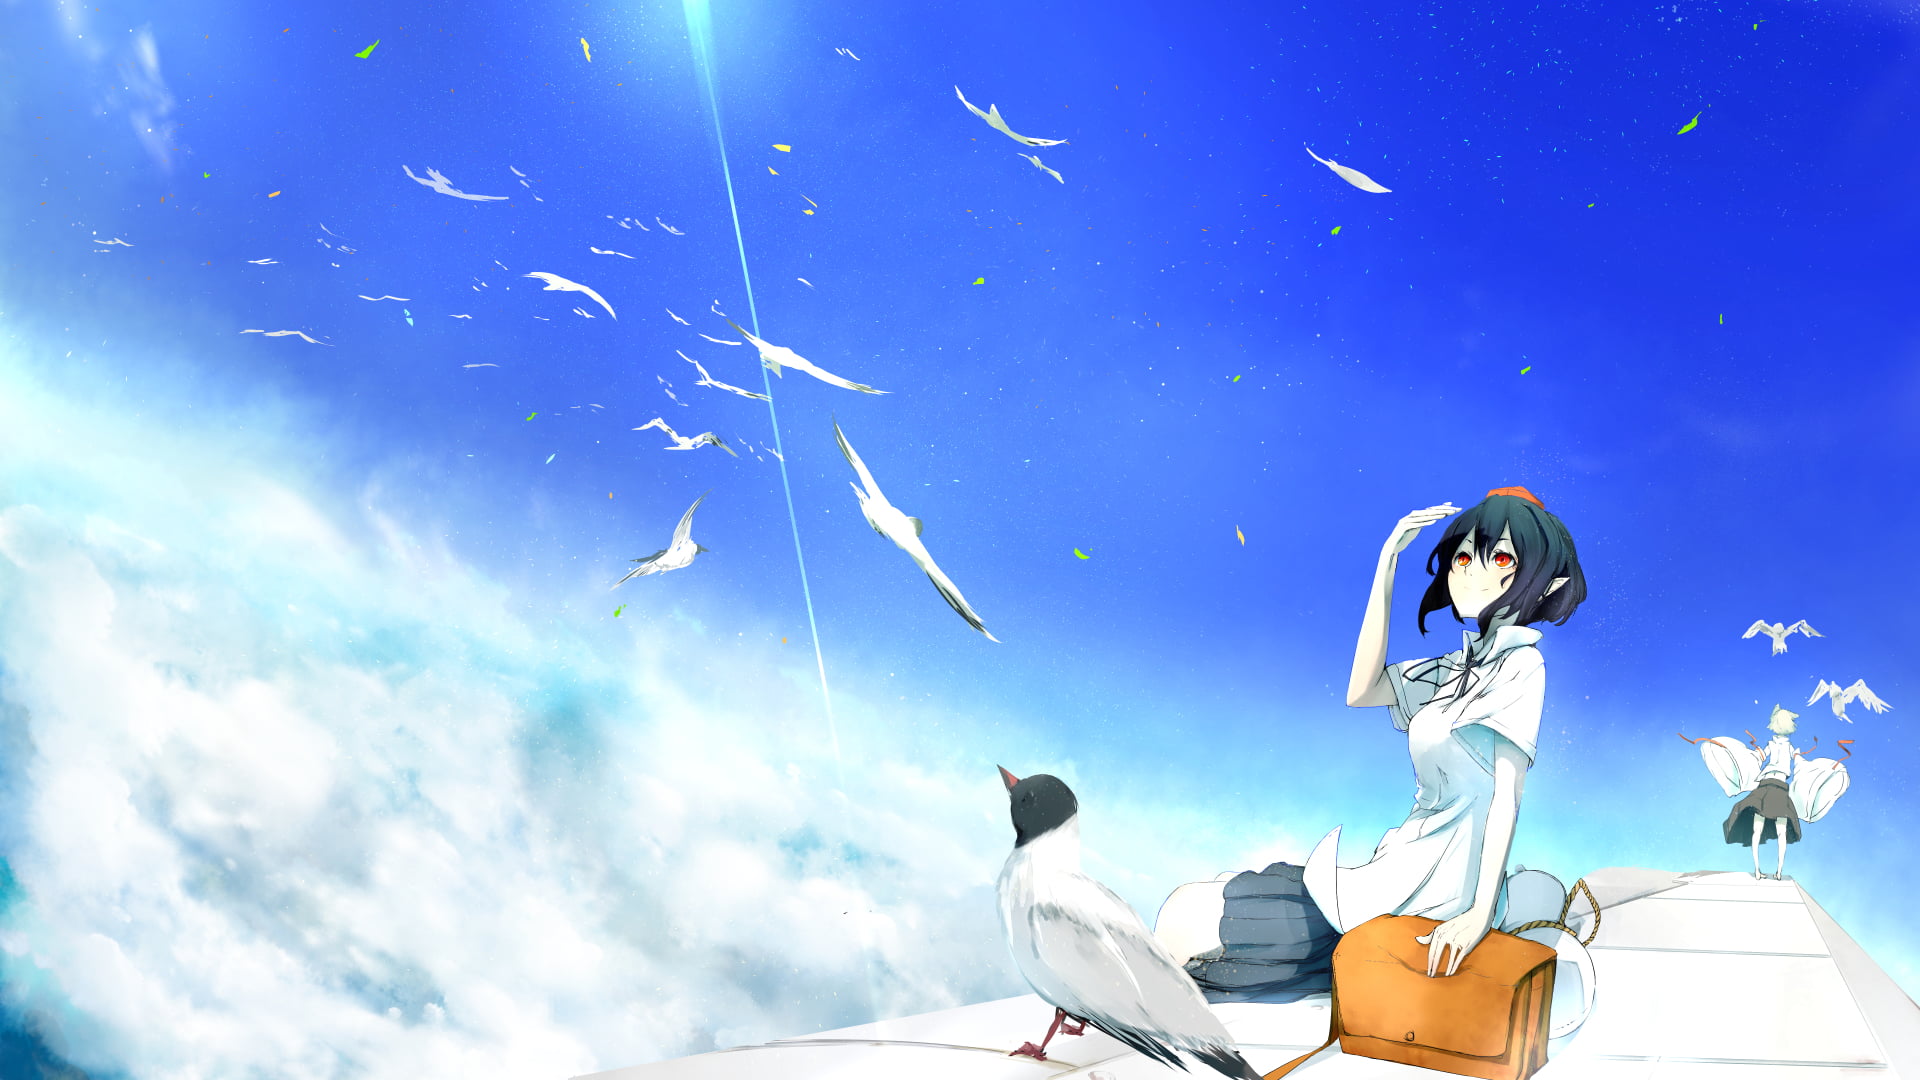 nuke cloud dandelion male anime character  Stable Diffusion  OpenArt